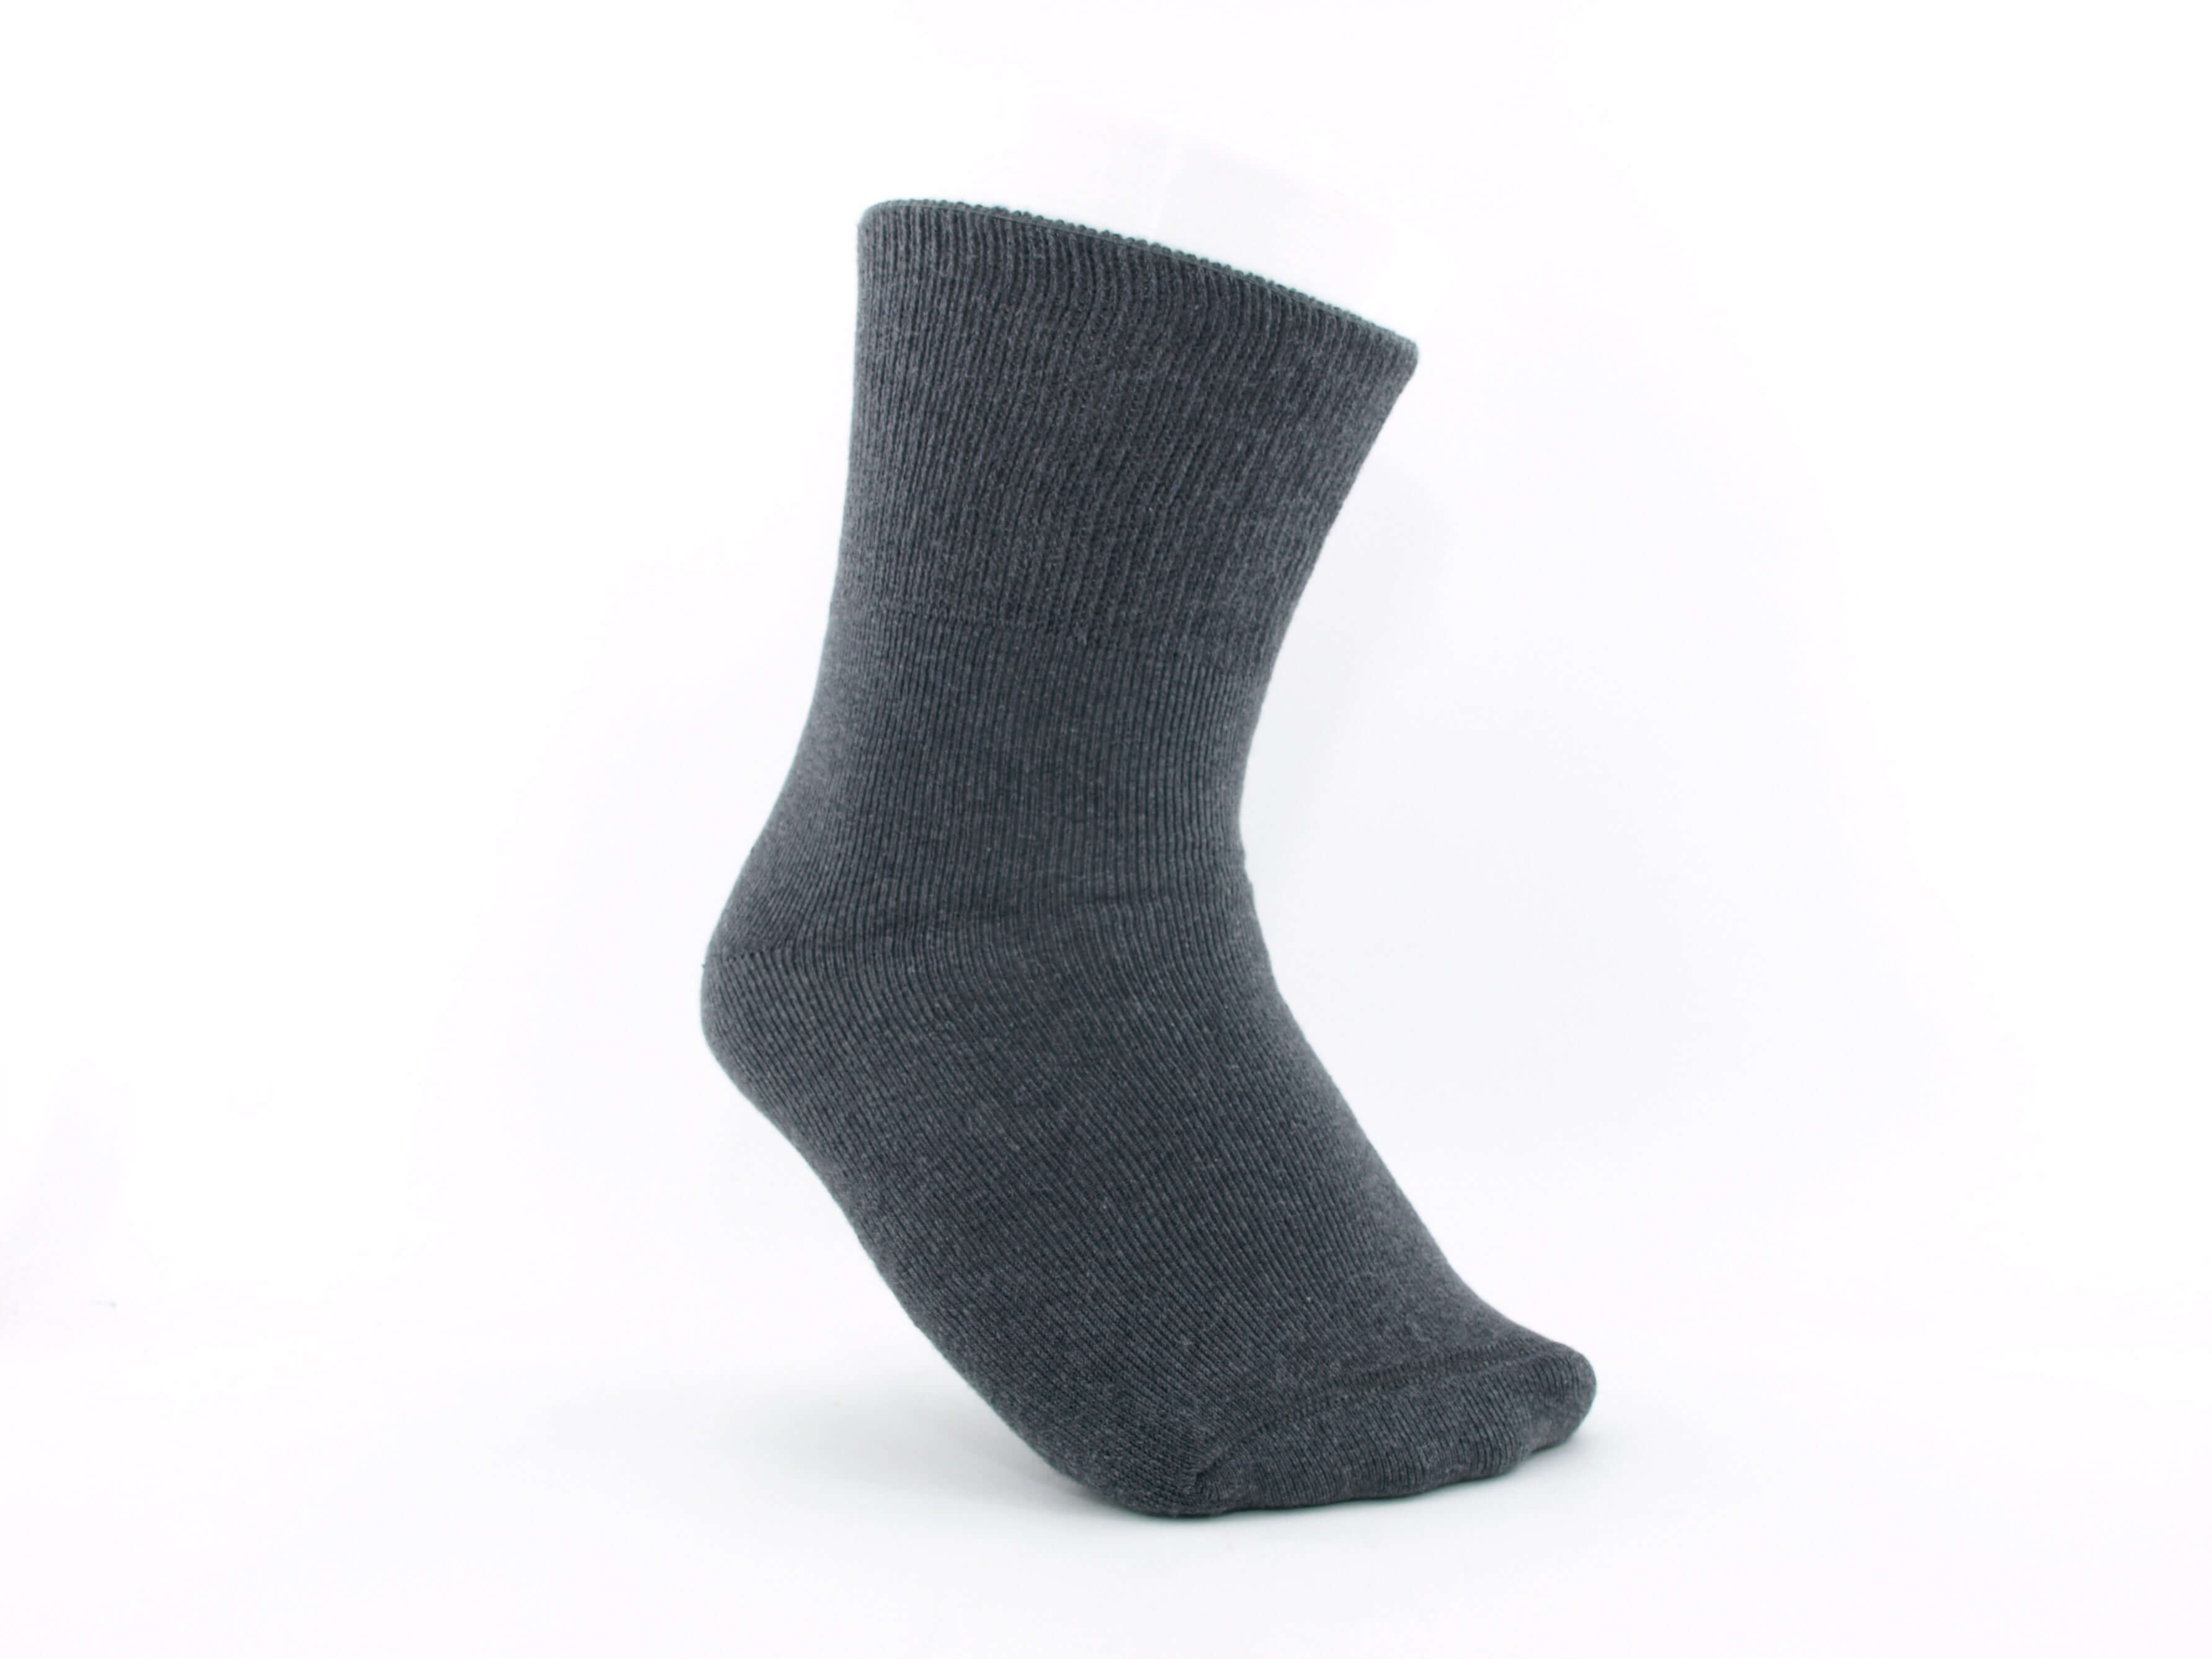 Bild: Diabetiker Socken ultralfex Frottee grau Sparpack 1